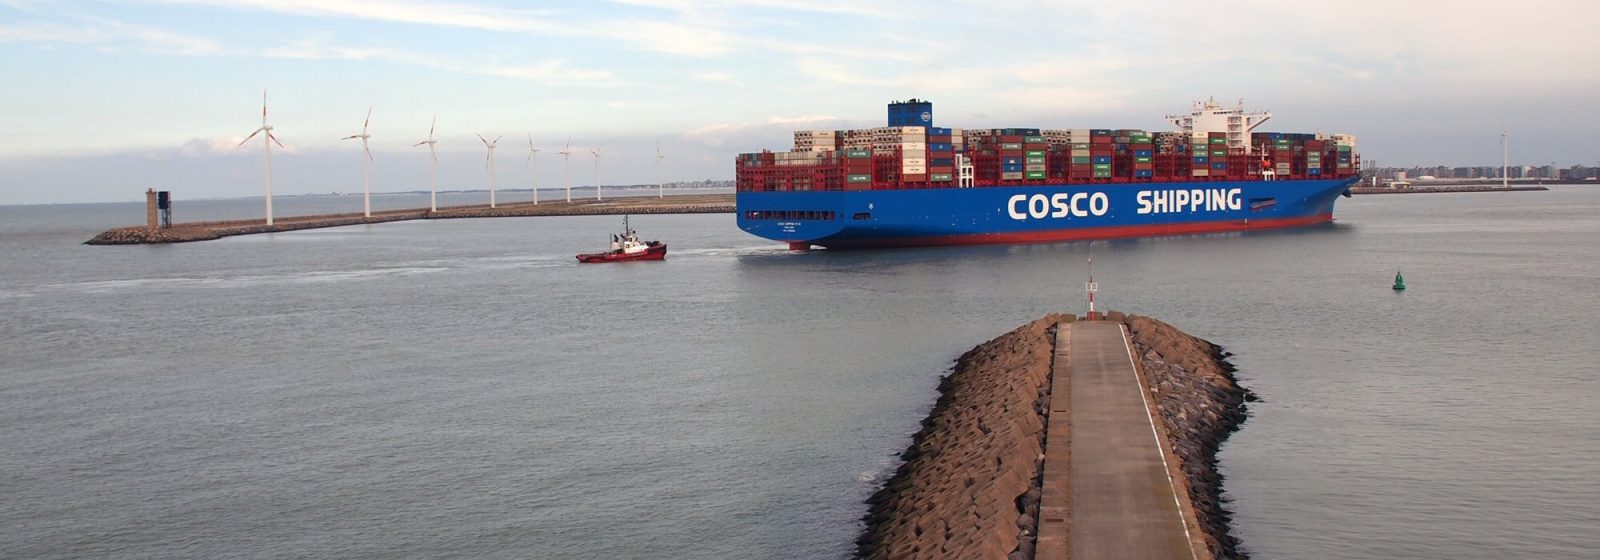 'COSCO Shipping Star' maidencall Zeebrugge 3 augustus 2019